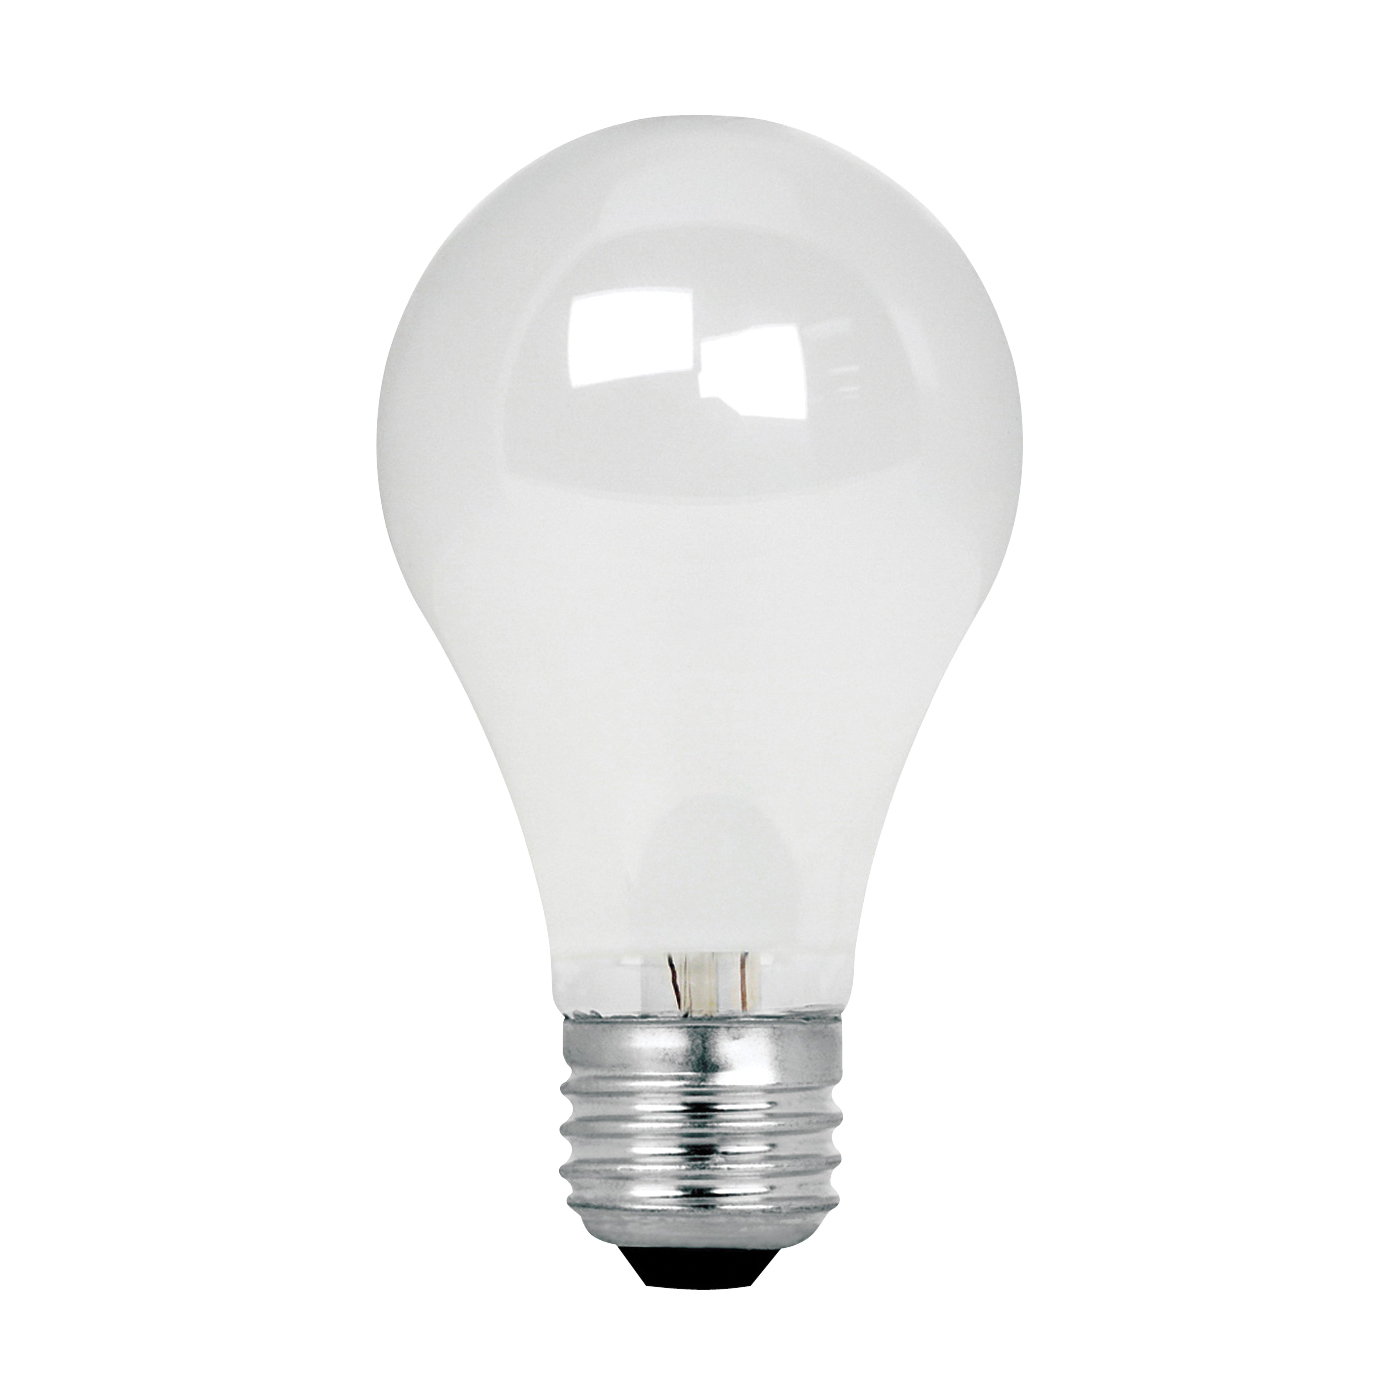 Q29A/W/DL/4/RP Halogen Bulb, 29 W, Medium E26 Lamp Base, A19 Lamp, Soft White Light, 310 Lumens